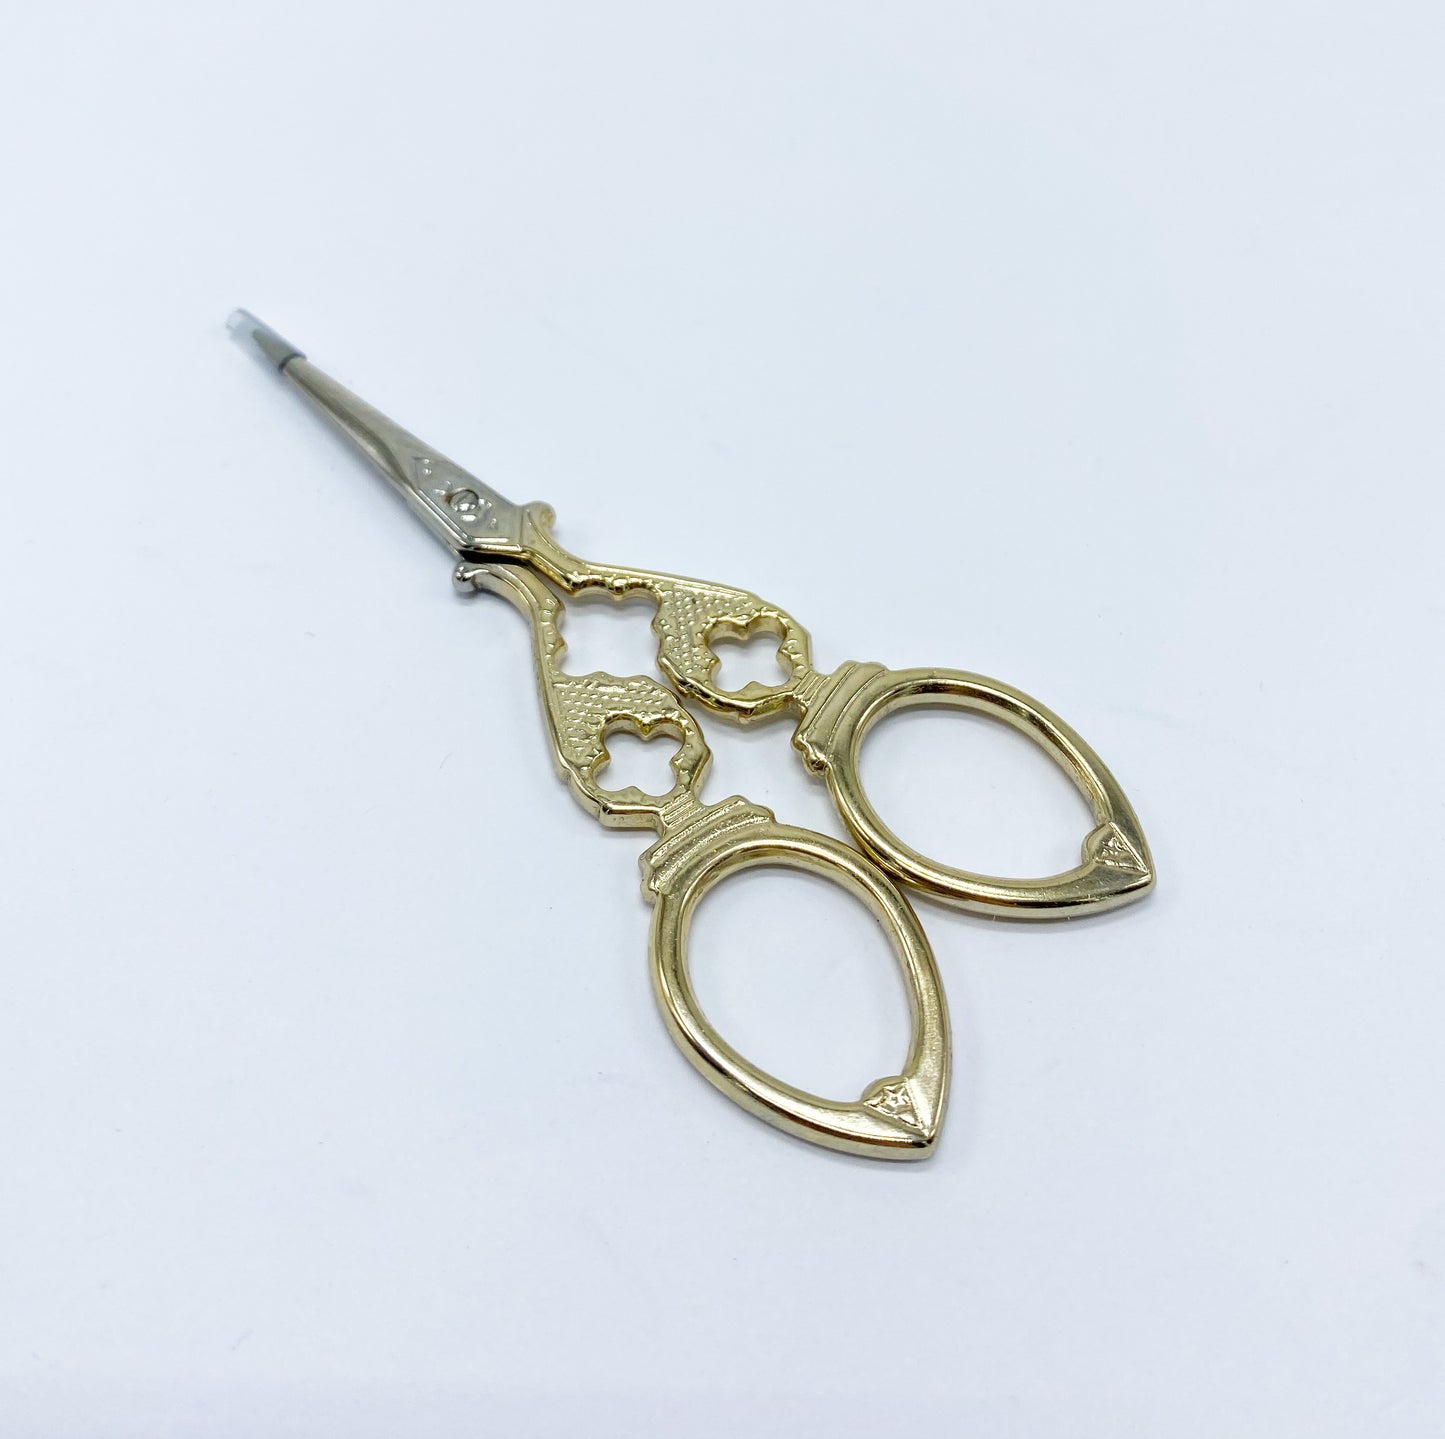 Sharp Gold Embroidery Scissors